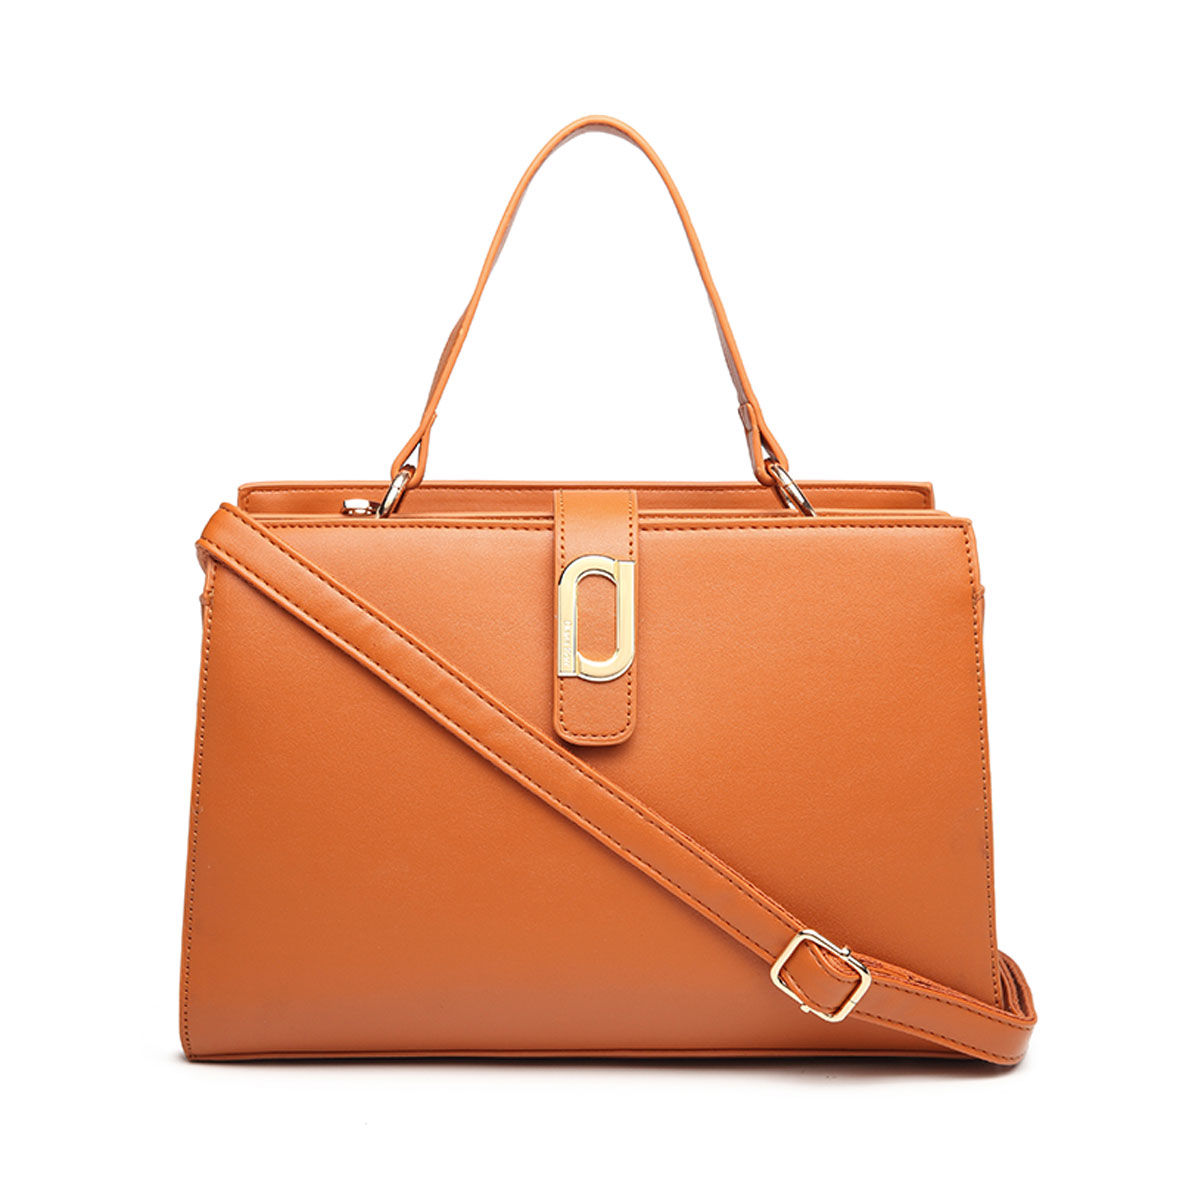 Diana Korr Clora Front Clasp Handbag - Brown